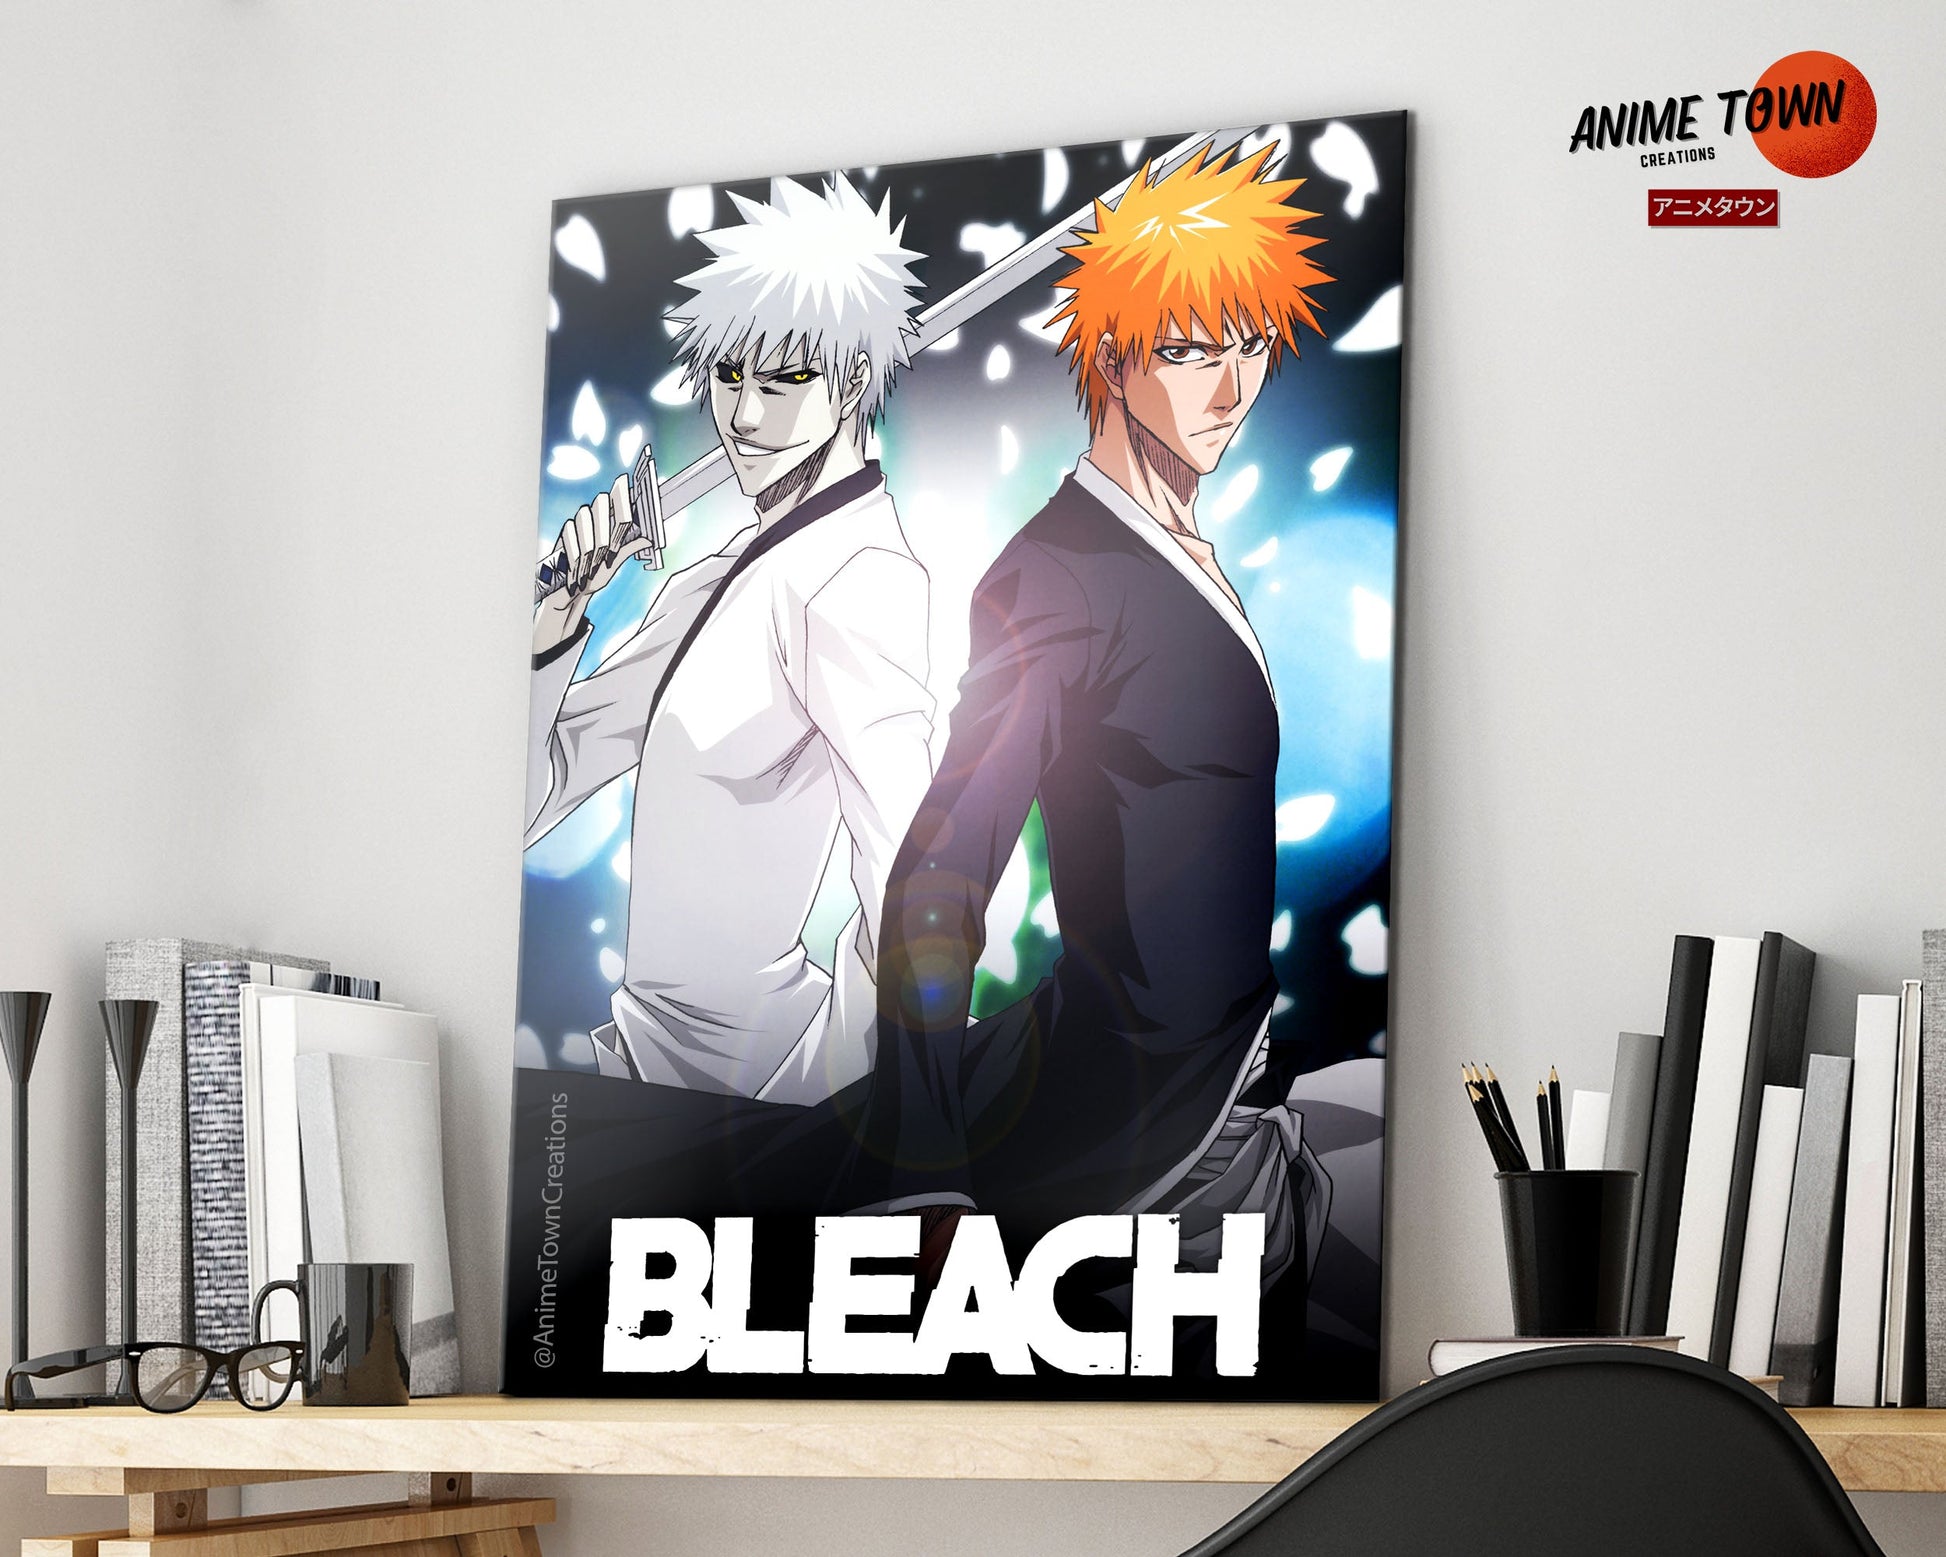 Ichigo kurosaki fullbringer - Bleach #anime